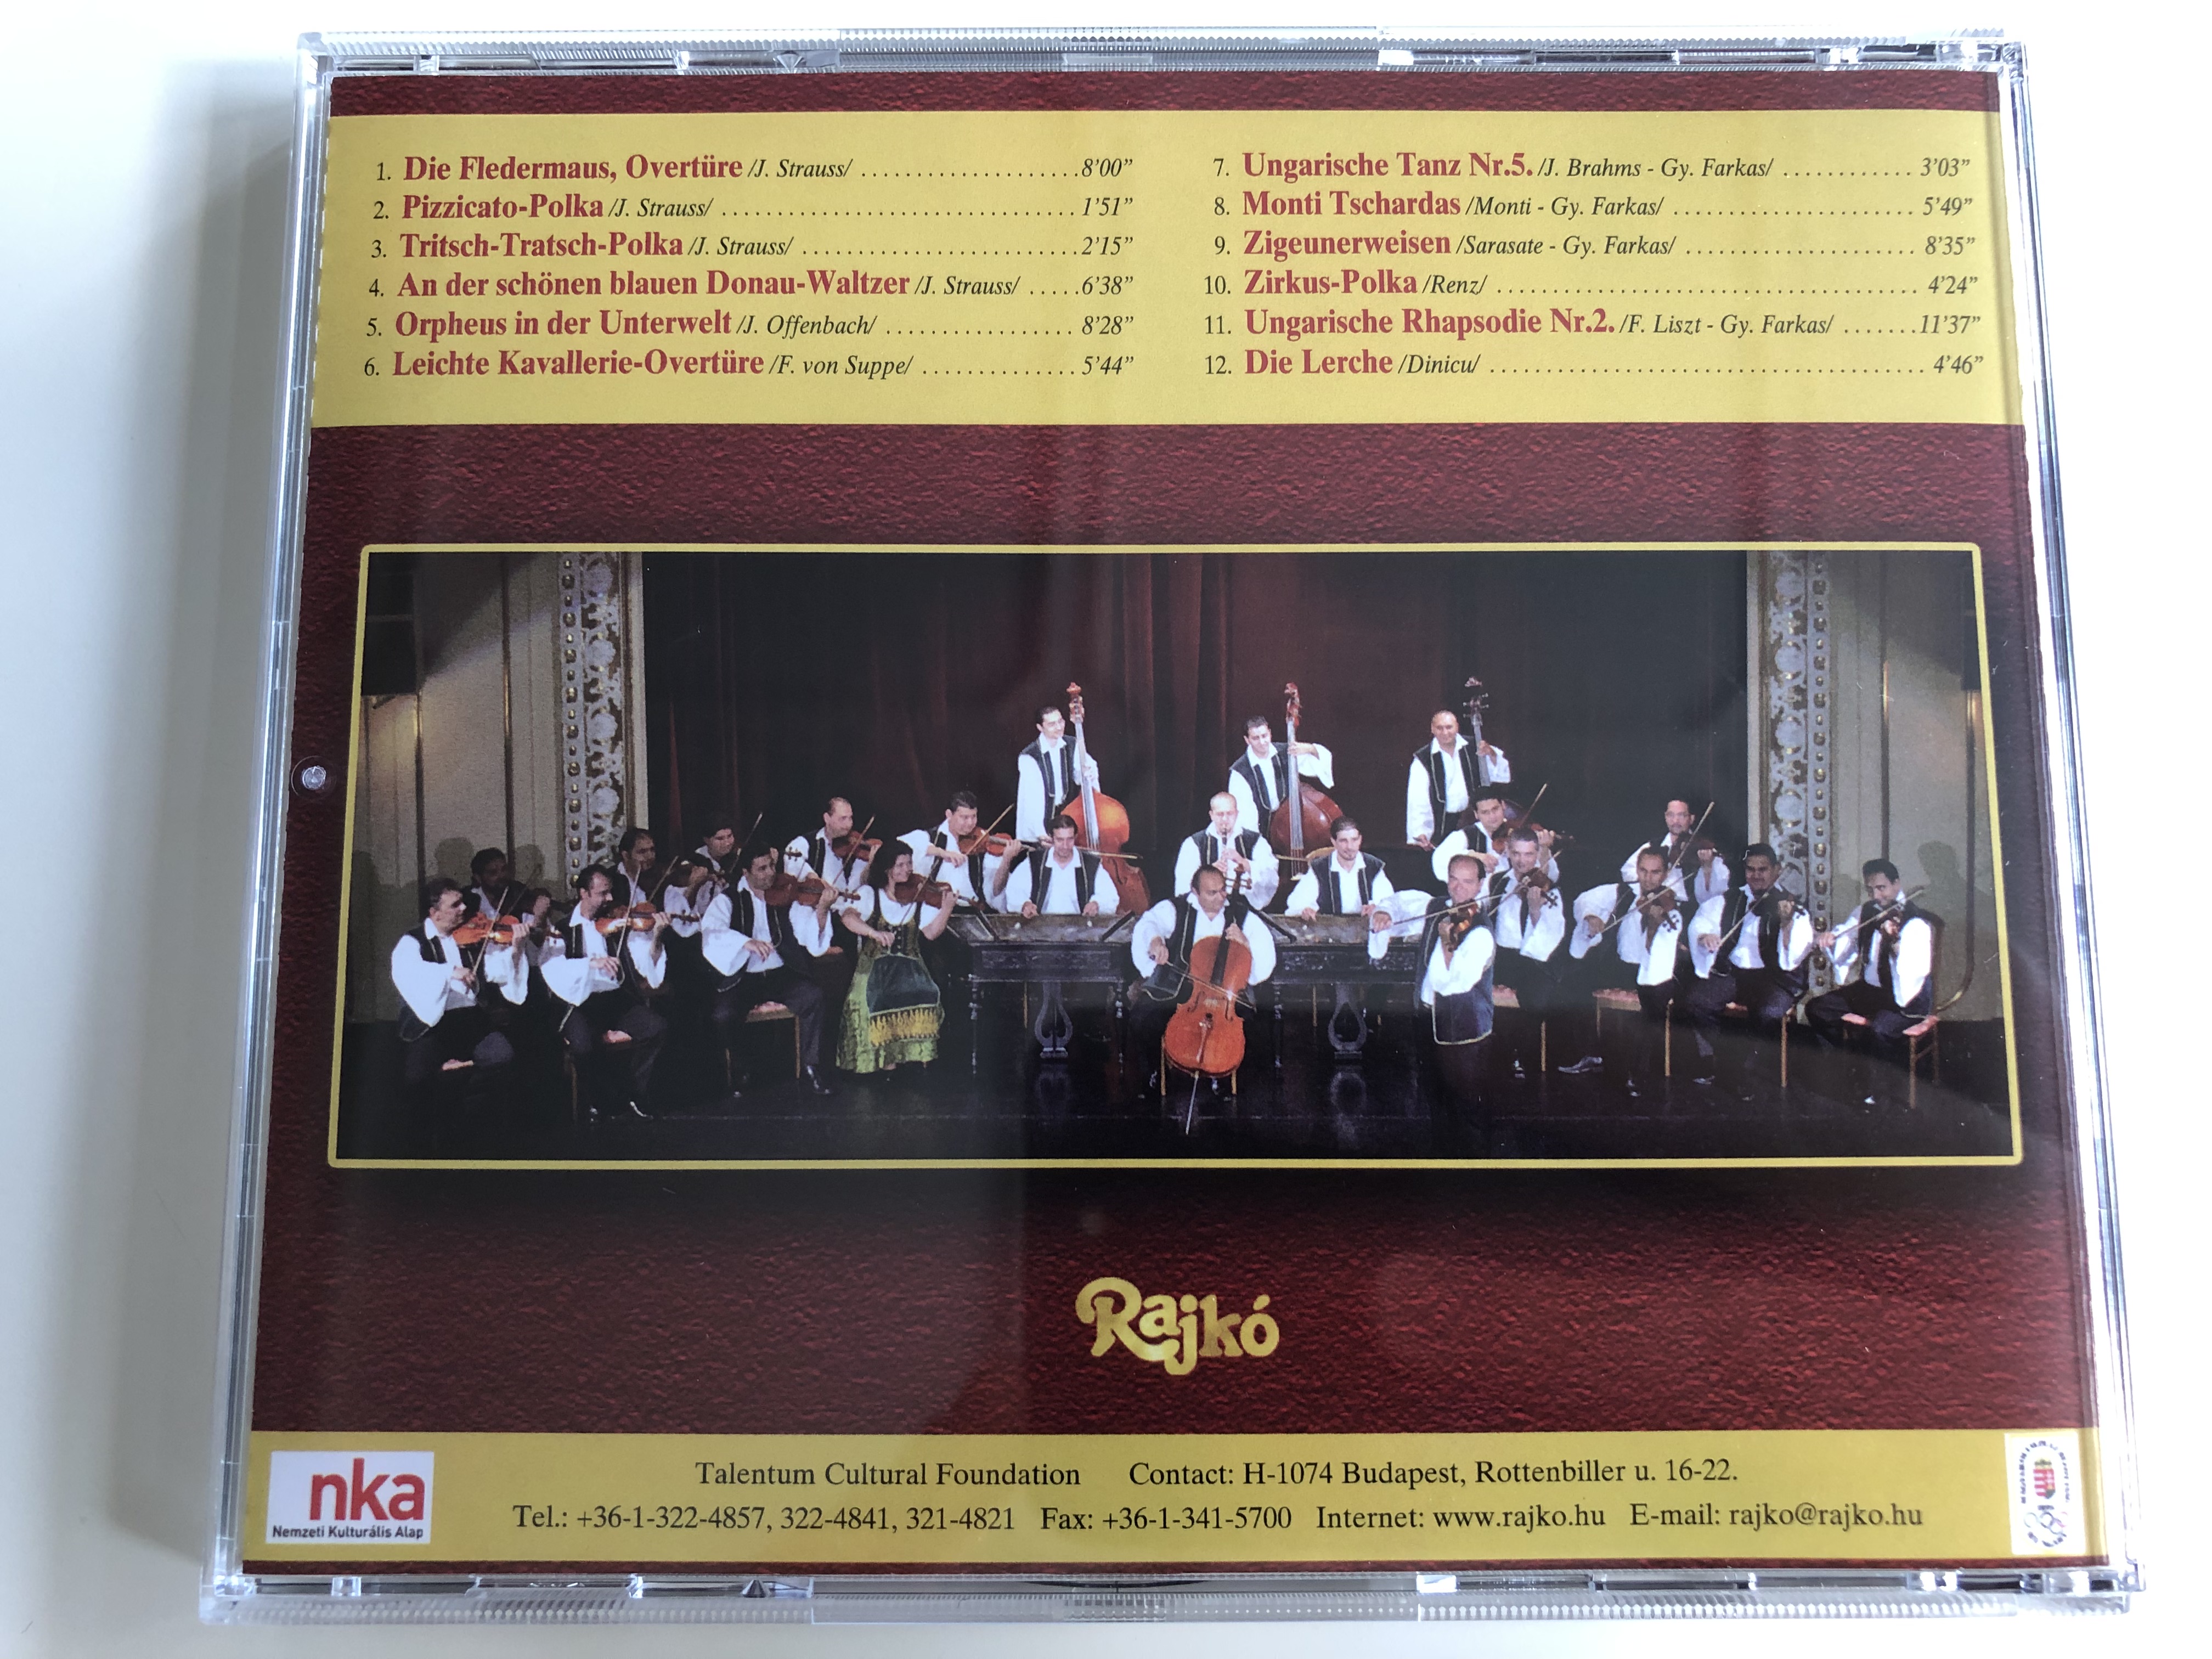 the-rajk-band-tkfcd42-audio-cd-2006-strauss-offenbach-suppe-brahms-monti-sarasate-renz-liszt-dinicu-6-.jpg